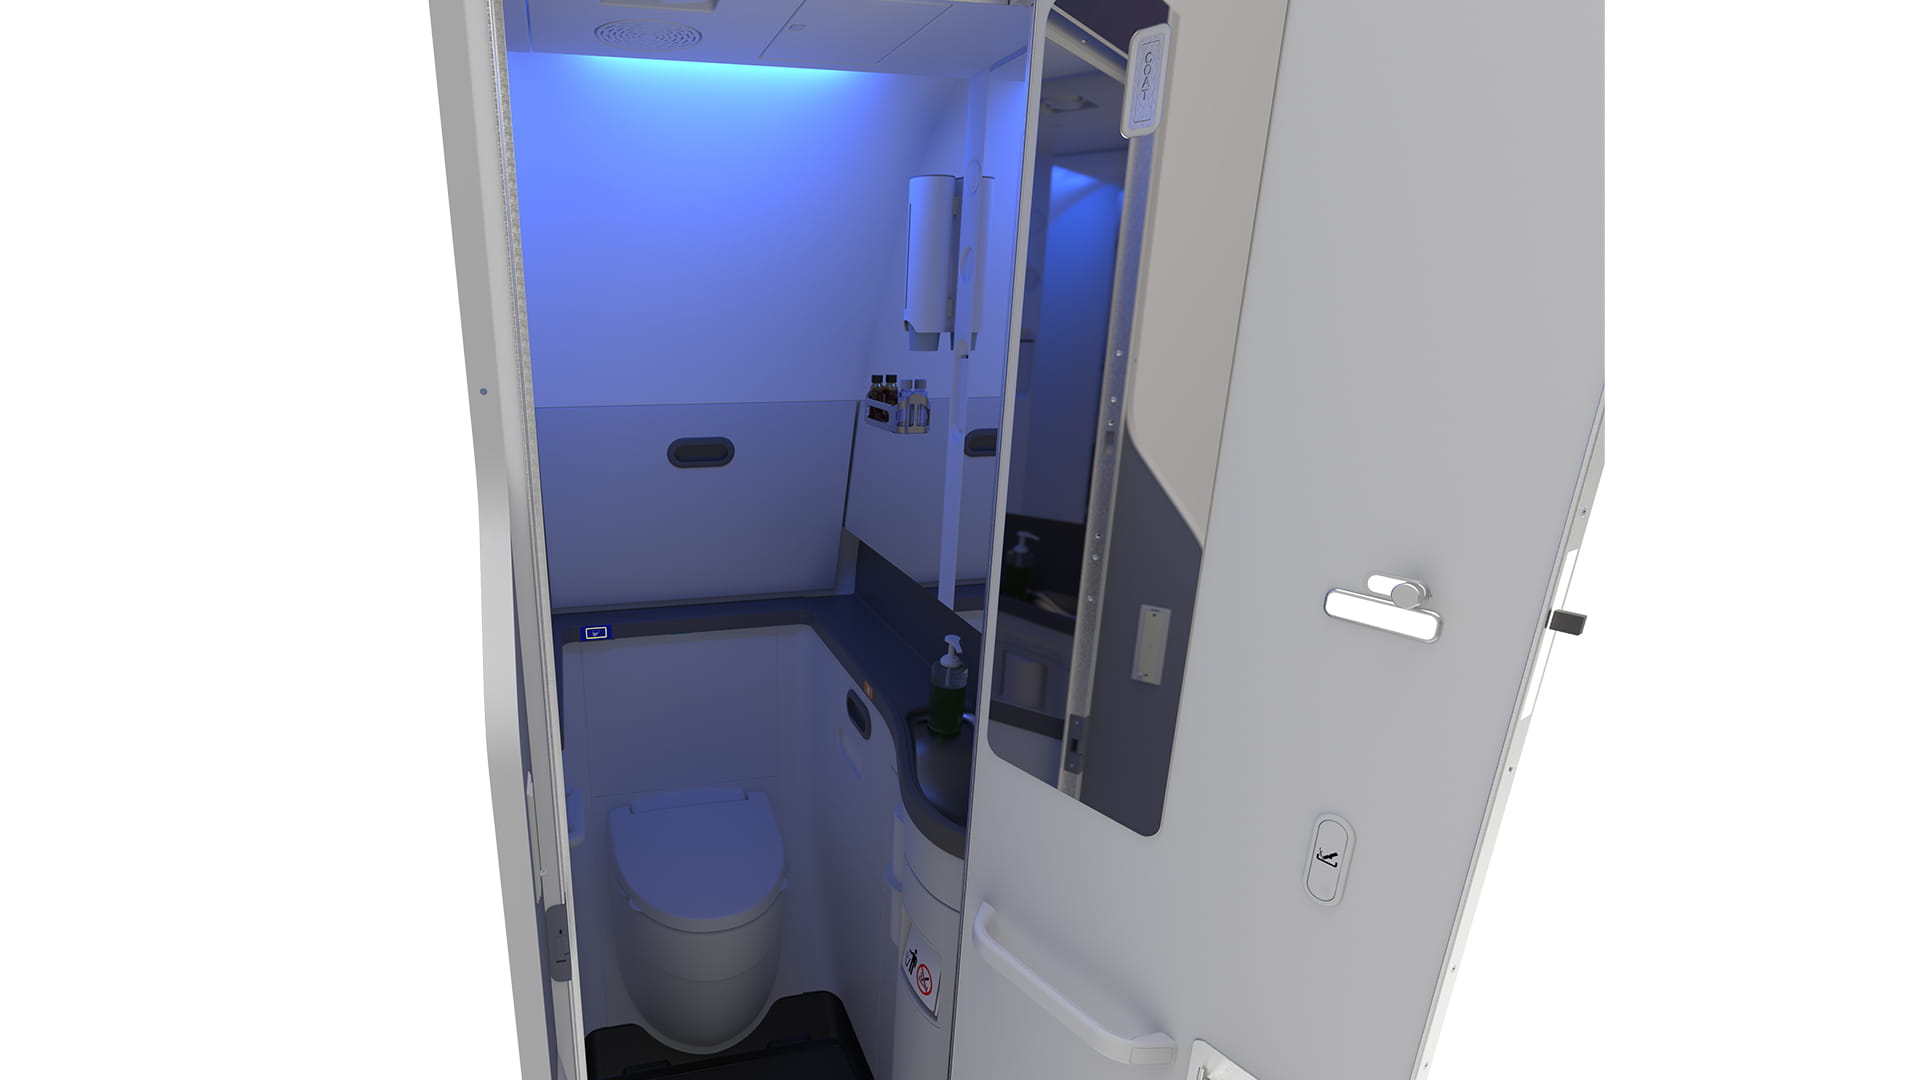 LED aircraft lavatory lighting